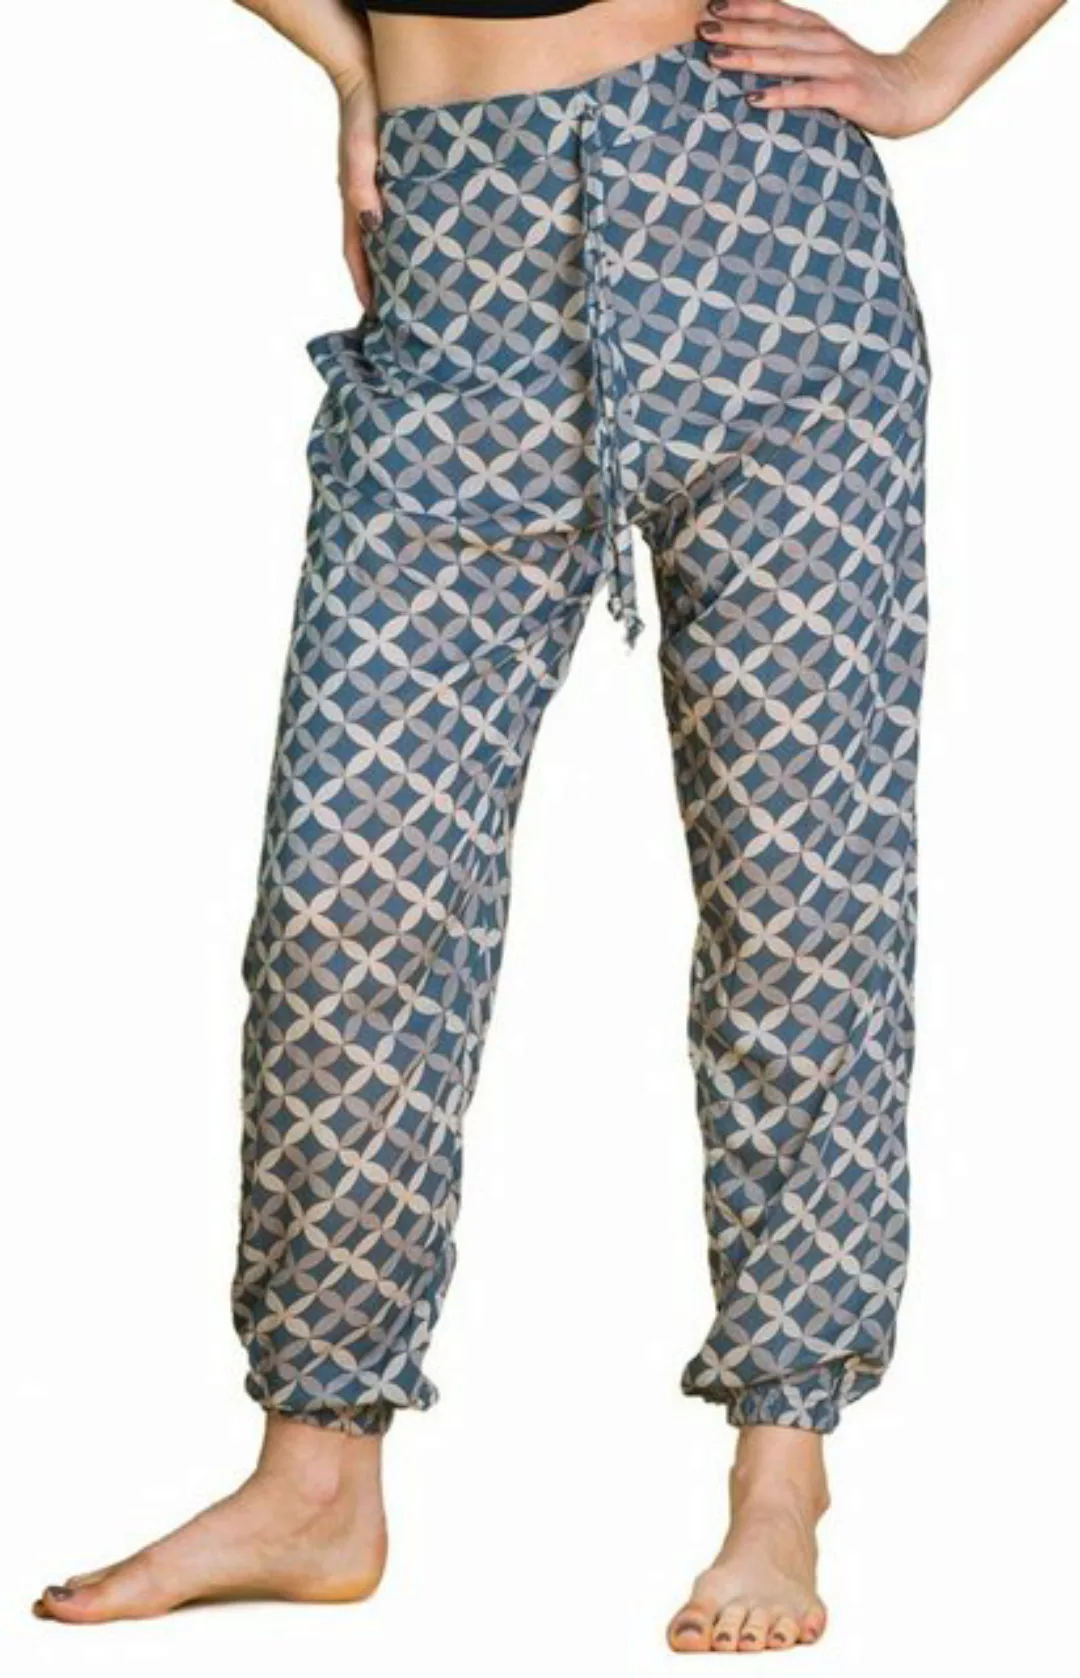 PANASIAM Relaxhose Relaxed pants geometric style aus 100 %Baumwolle bequeme günstig online kaufen